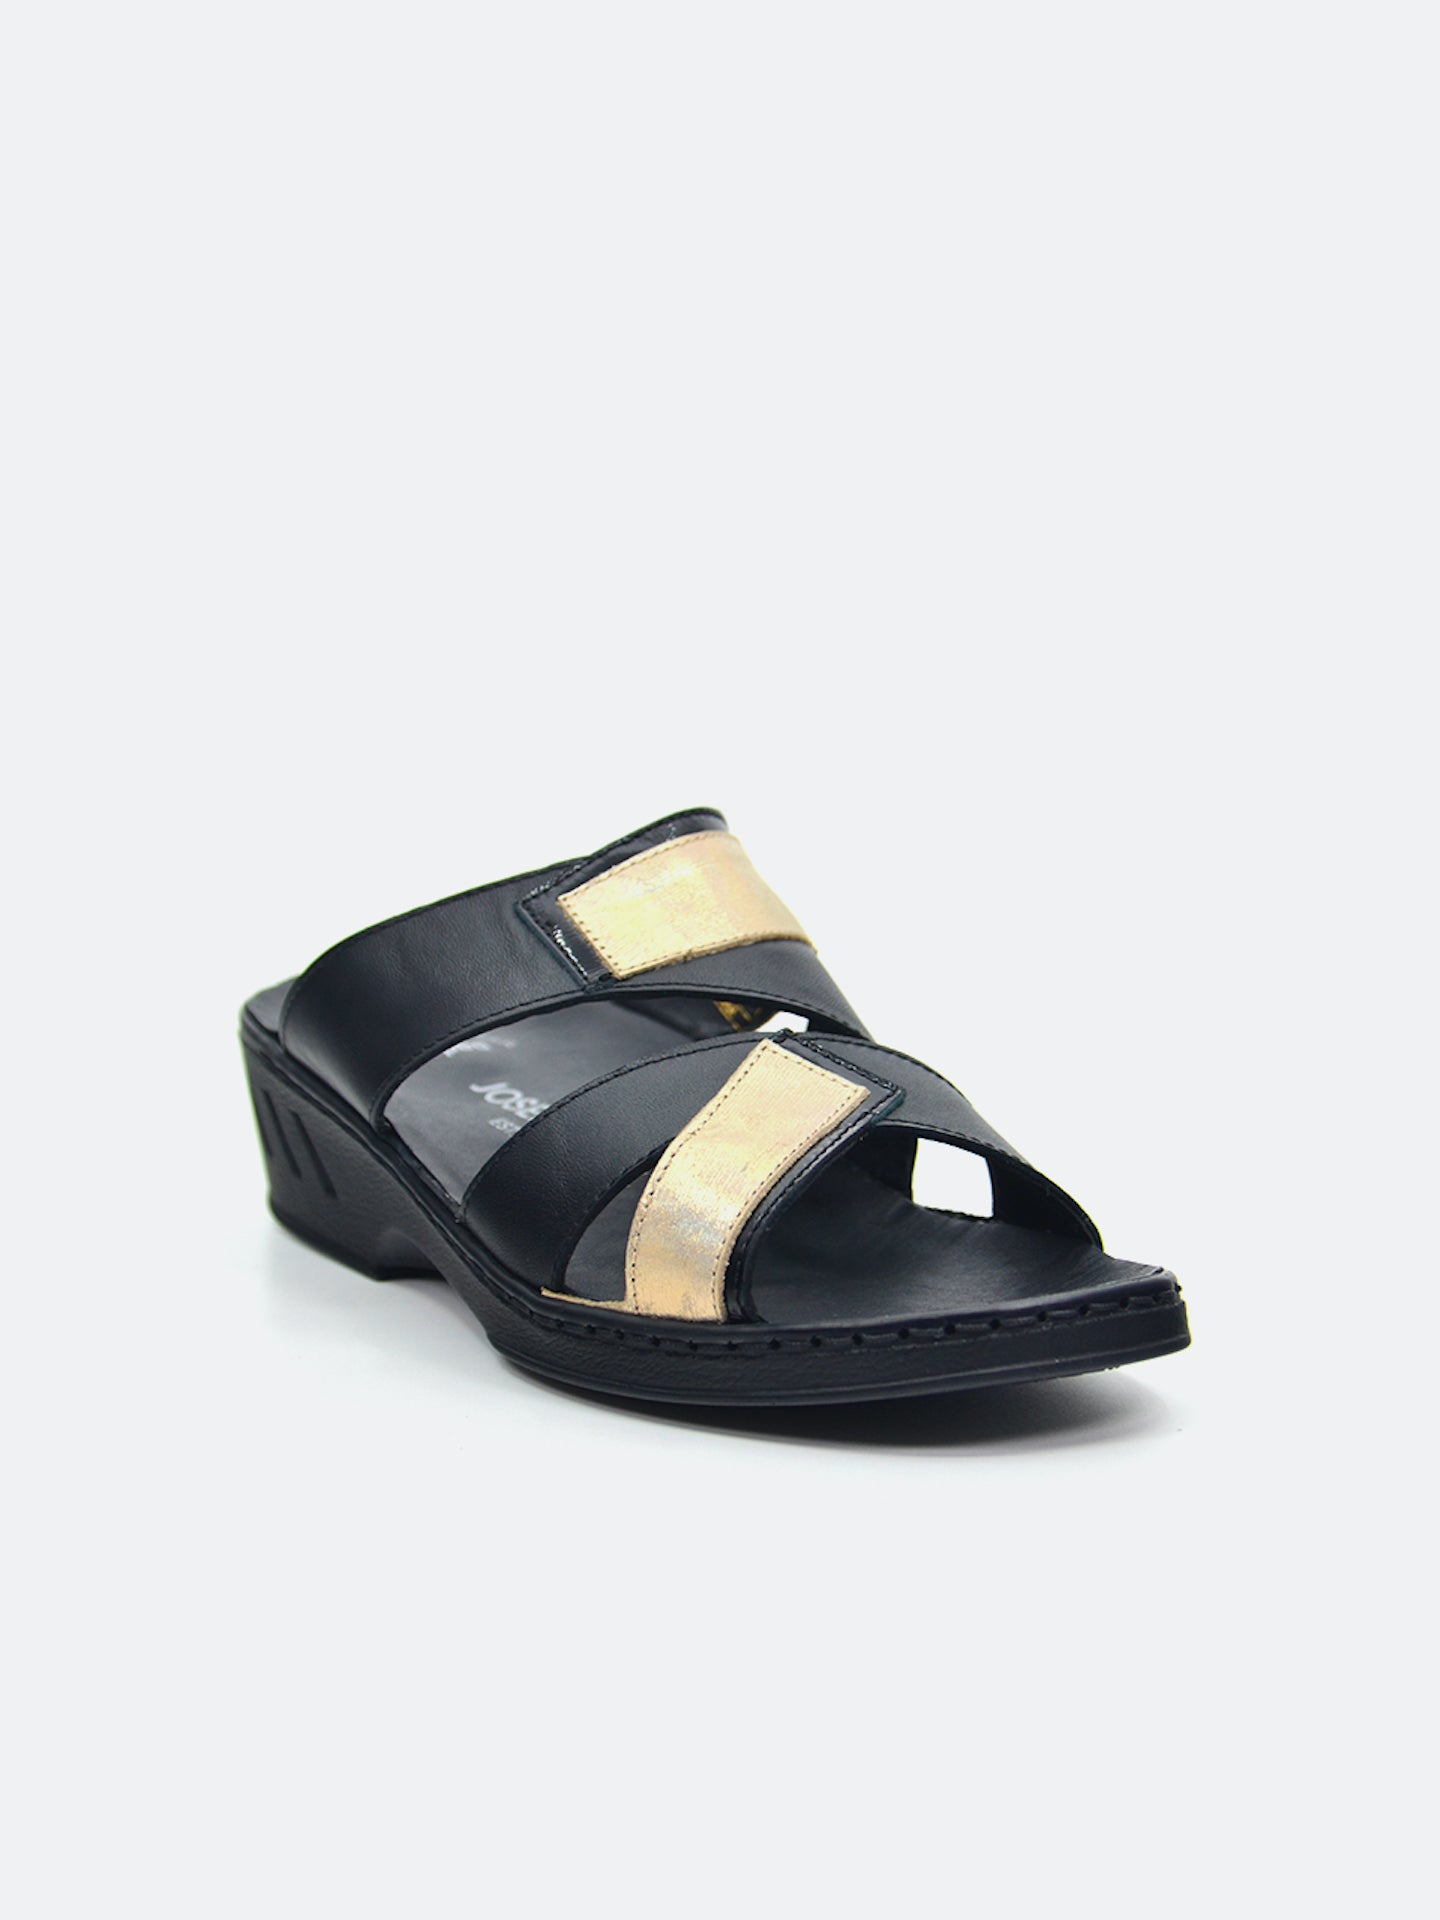 Josef Seibel Women's Flat Sandals #color_Black